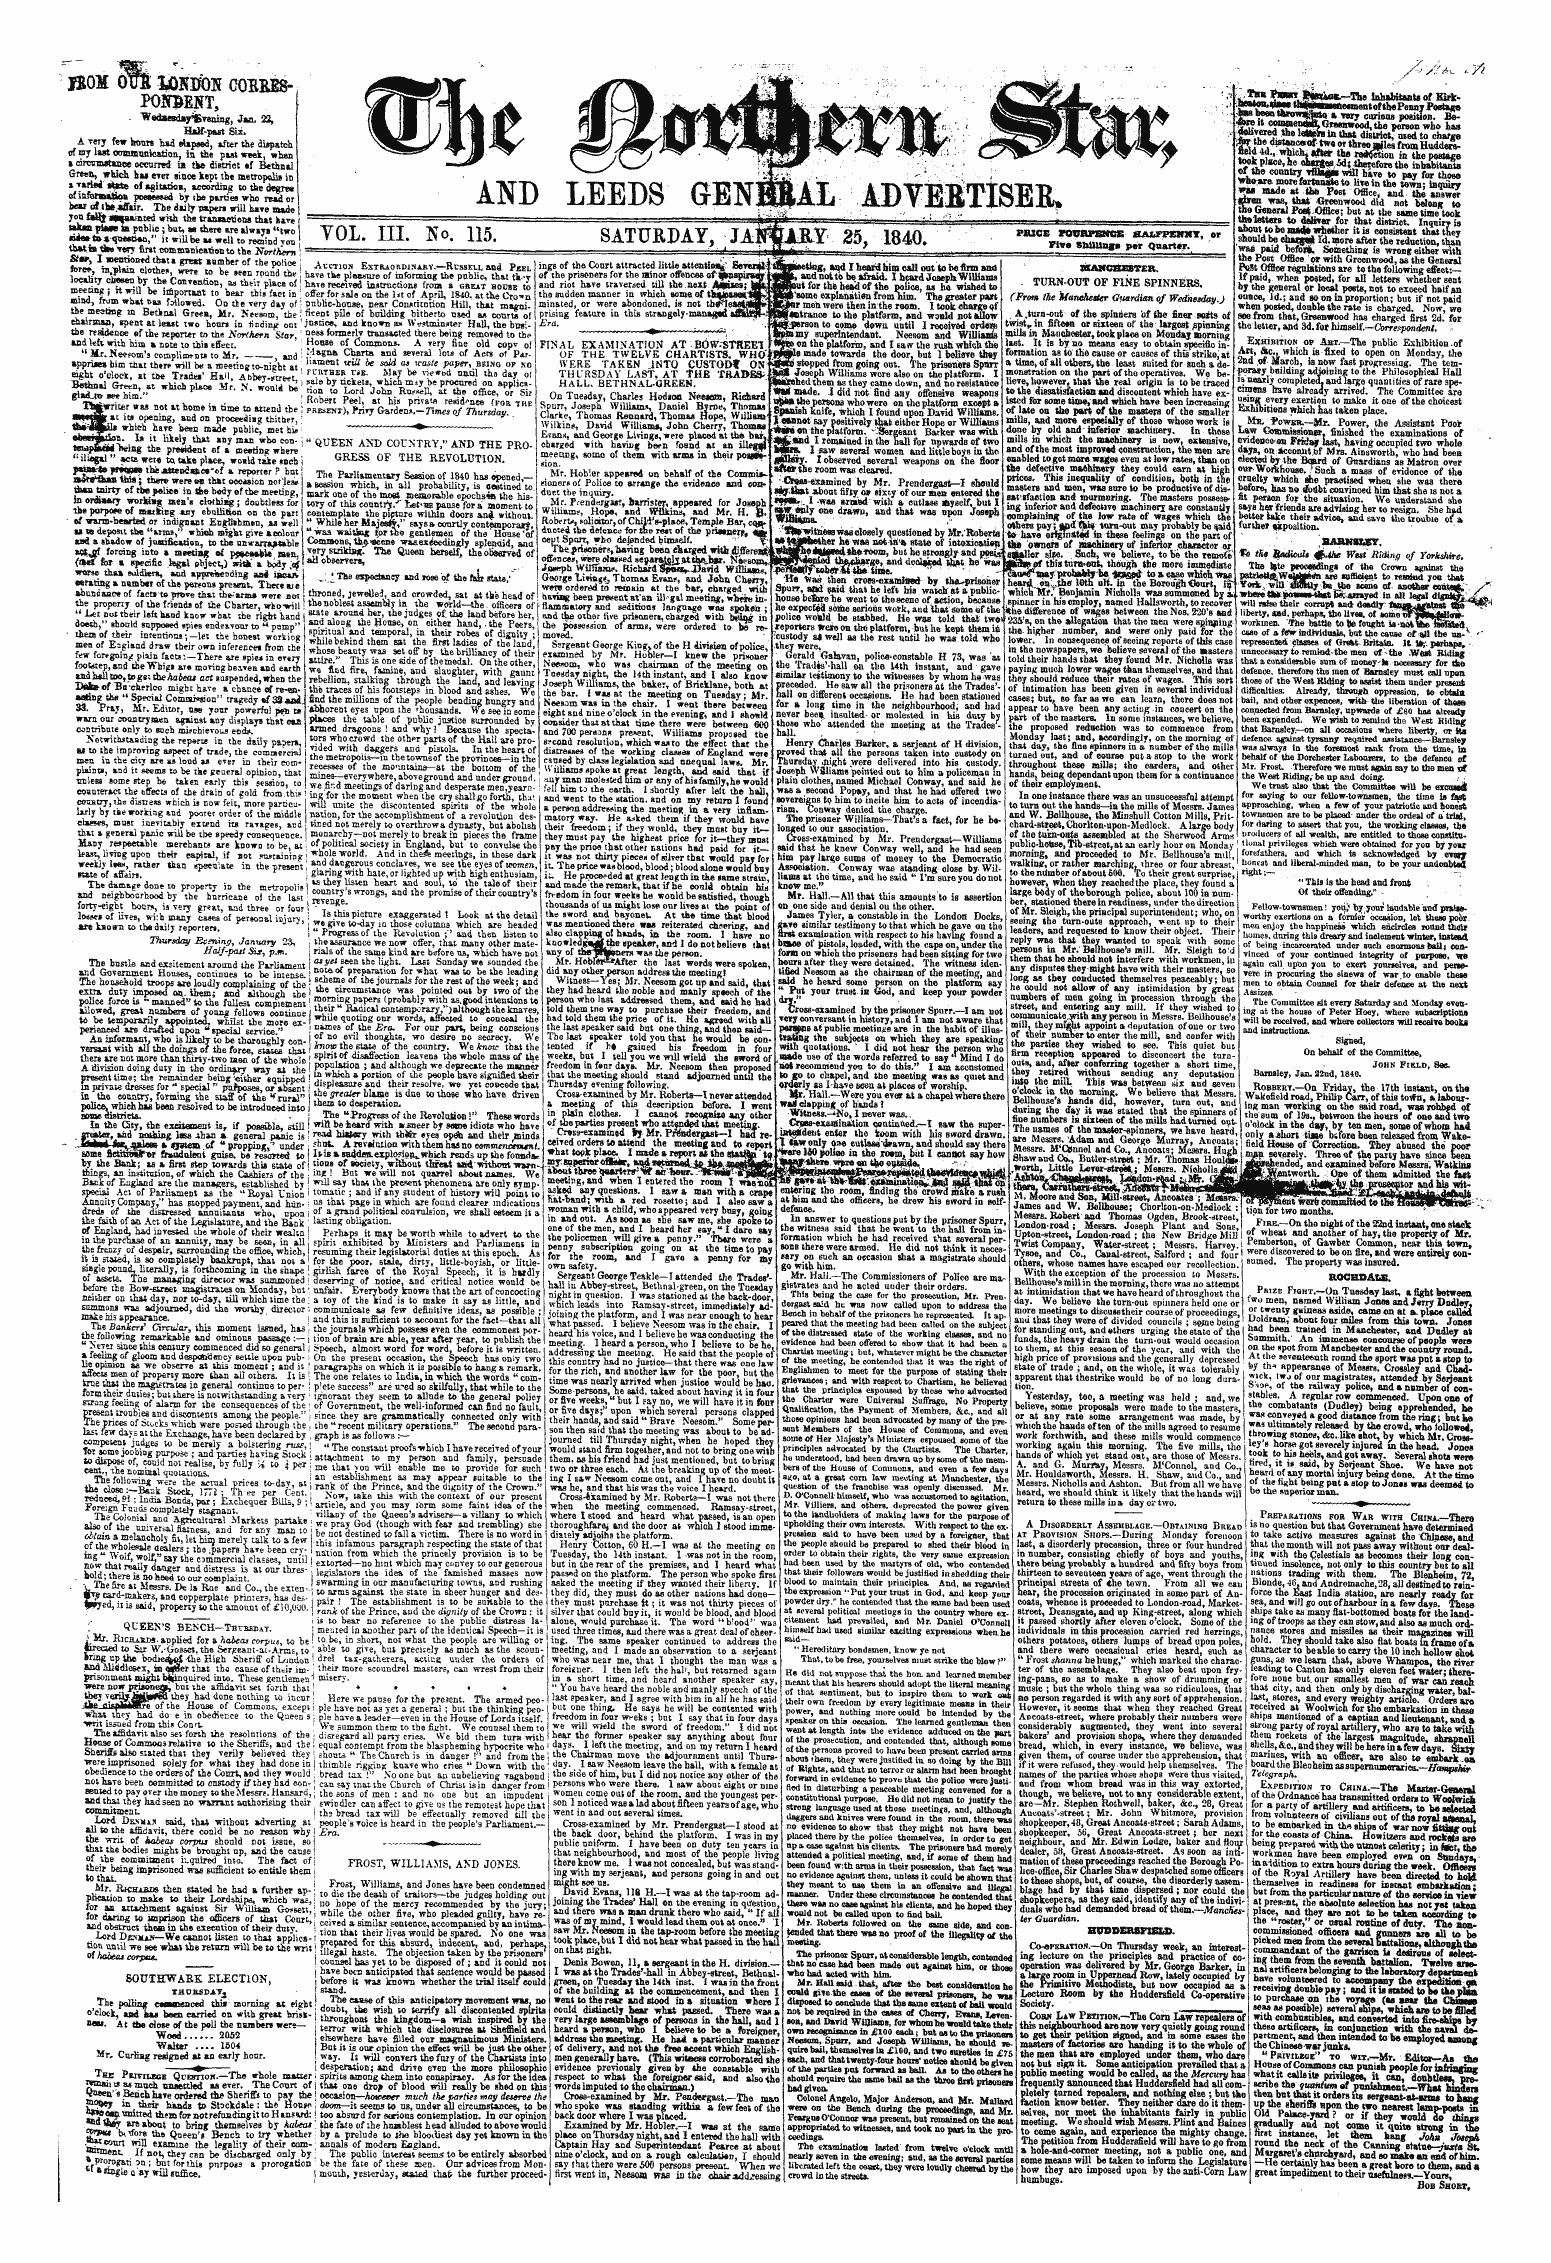 Northern Star (1837-1852): jS F Y, 1st edition - Jsom Oft Loeikm C0me8-P03fmnt.